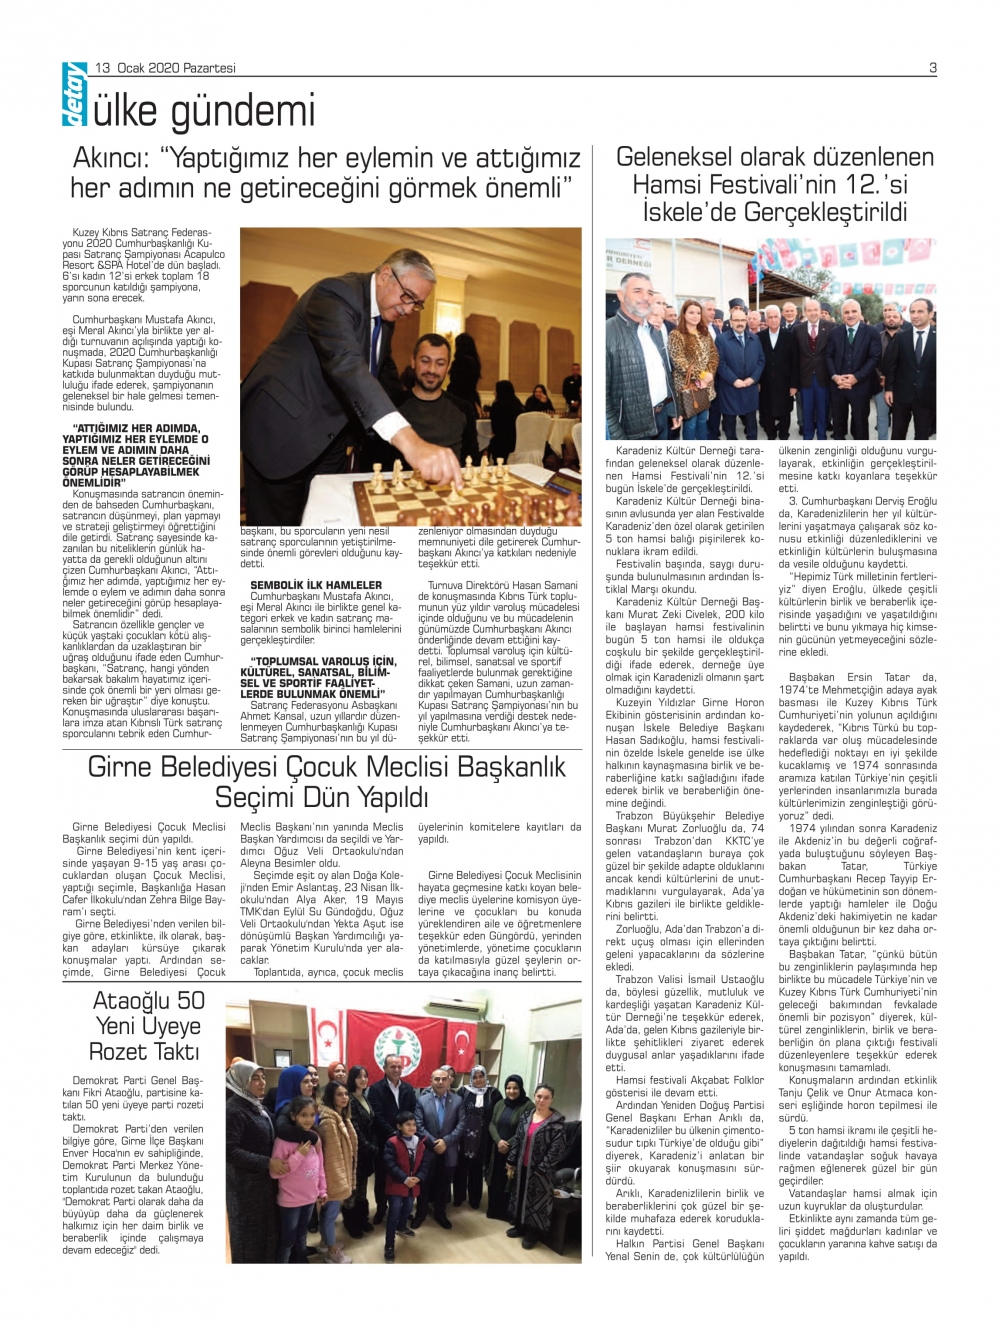 Detay Gazetes 13 Ocak 2020 galerisi resim 3